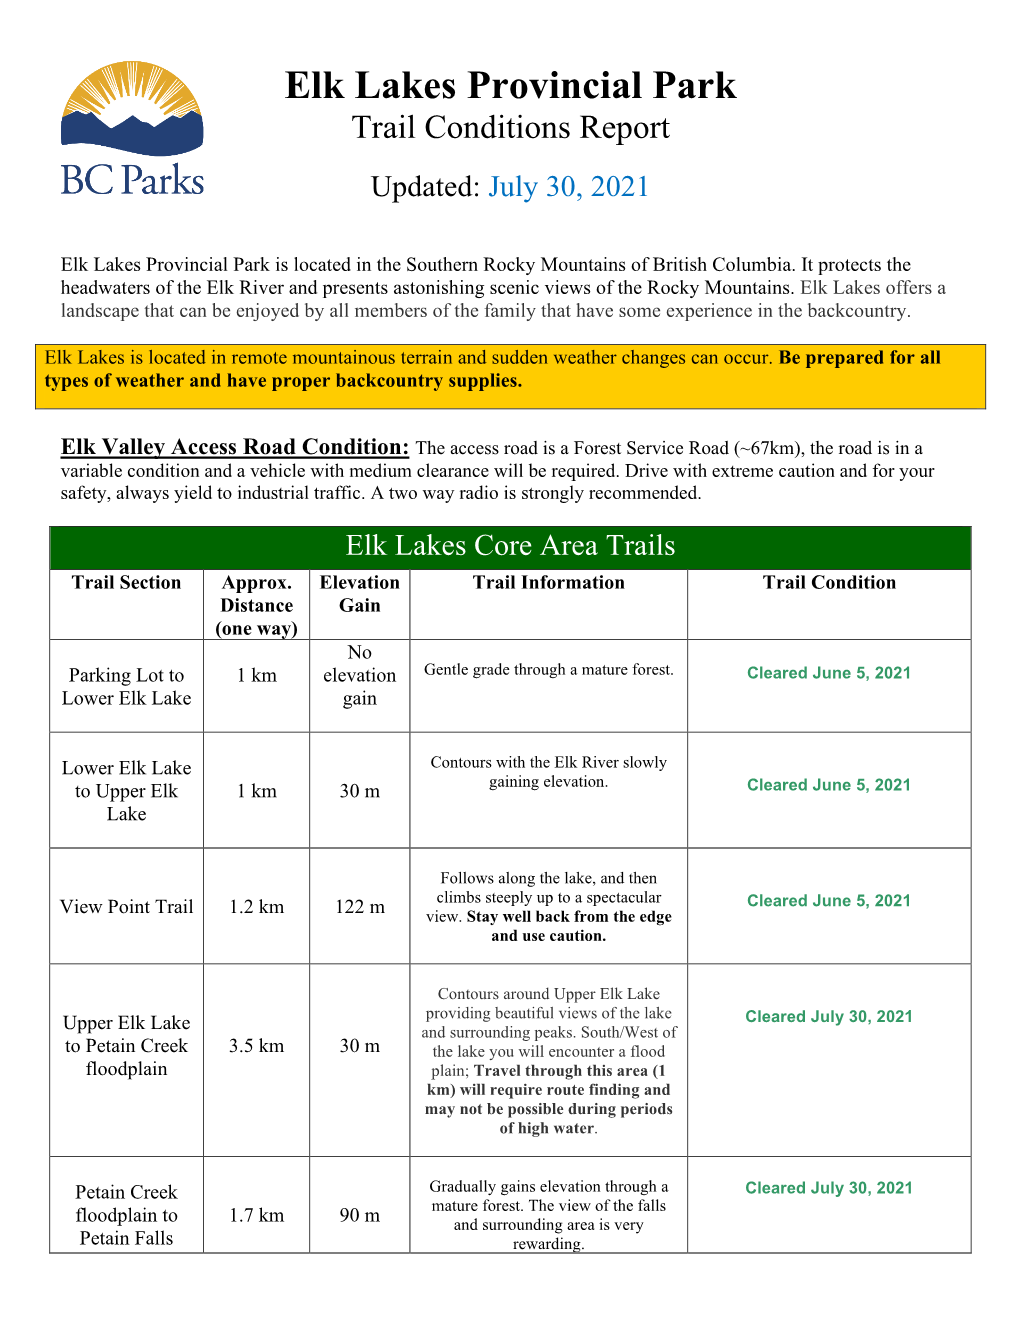 Elk Lakes Provincial Park Trail Conditions Report